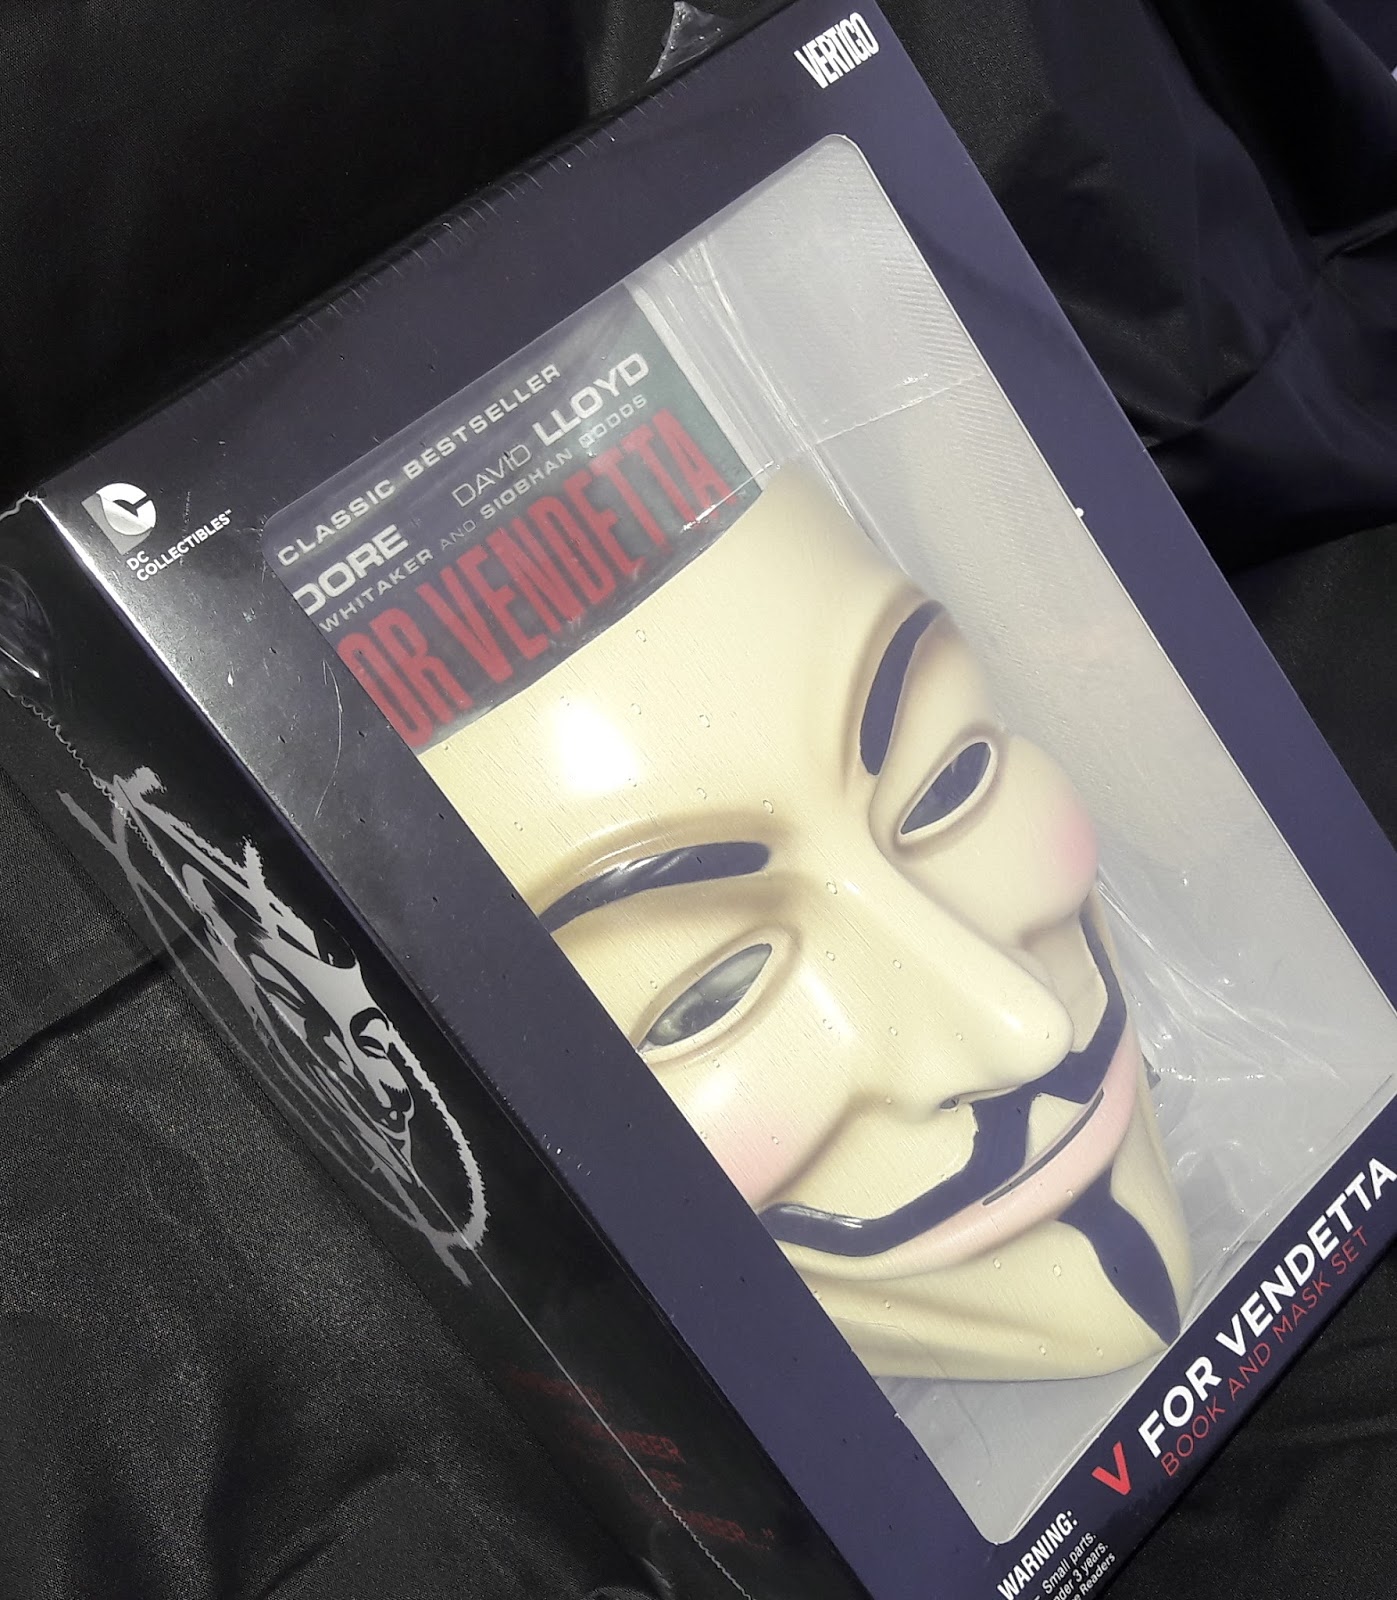 Comics.uy V for Vendetta Book and mask set